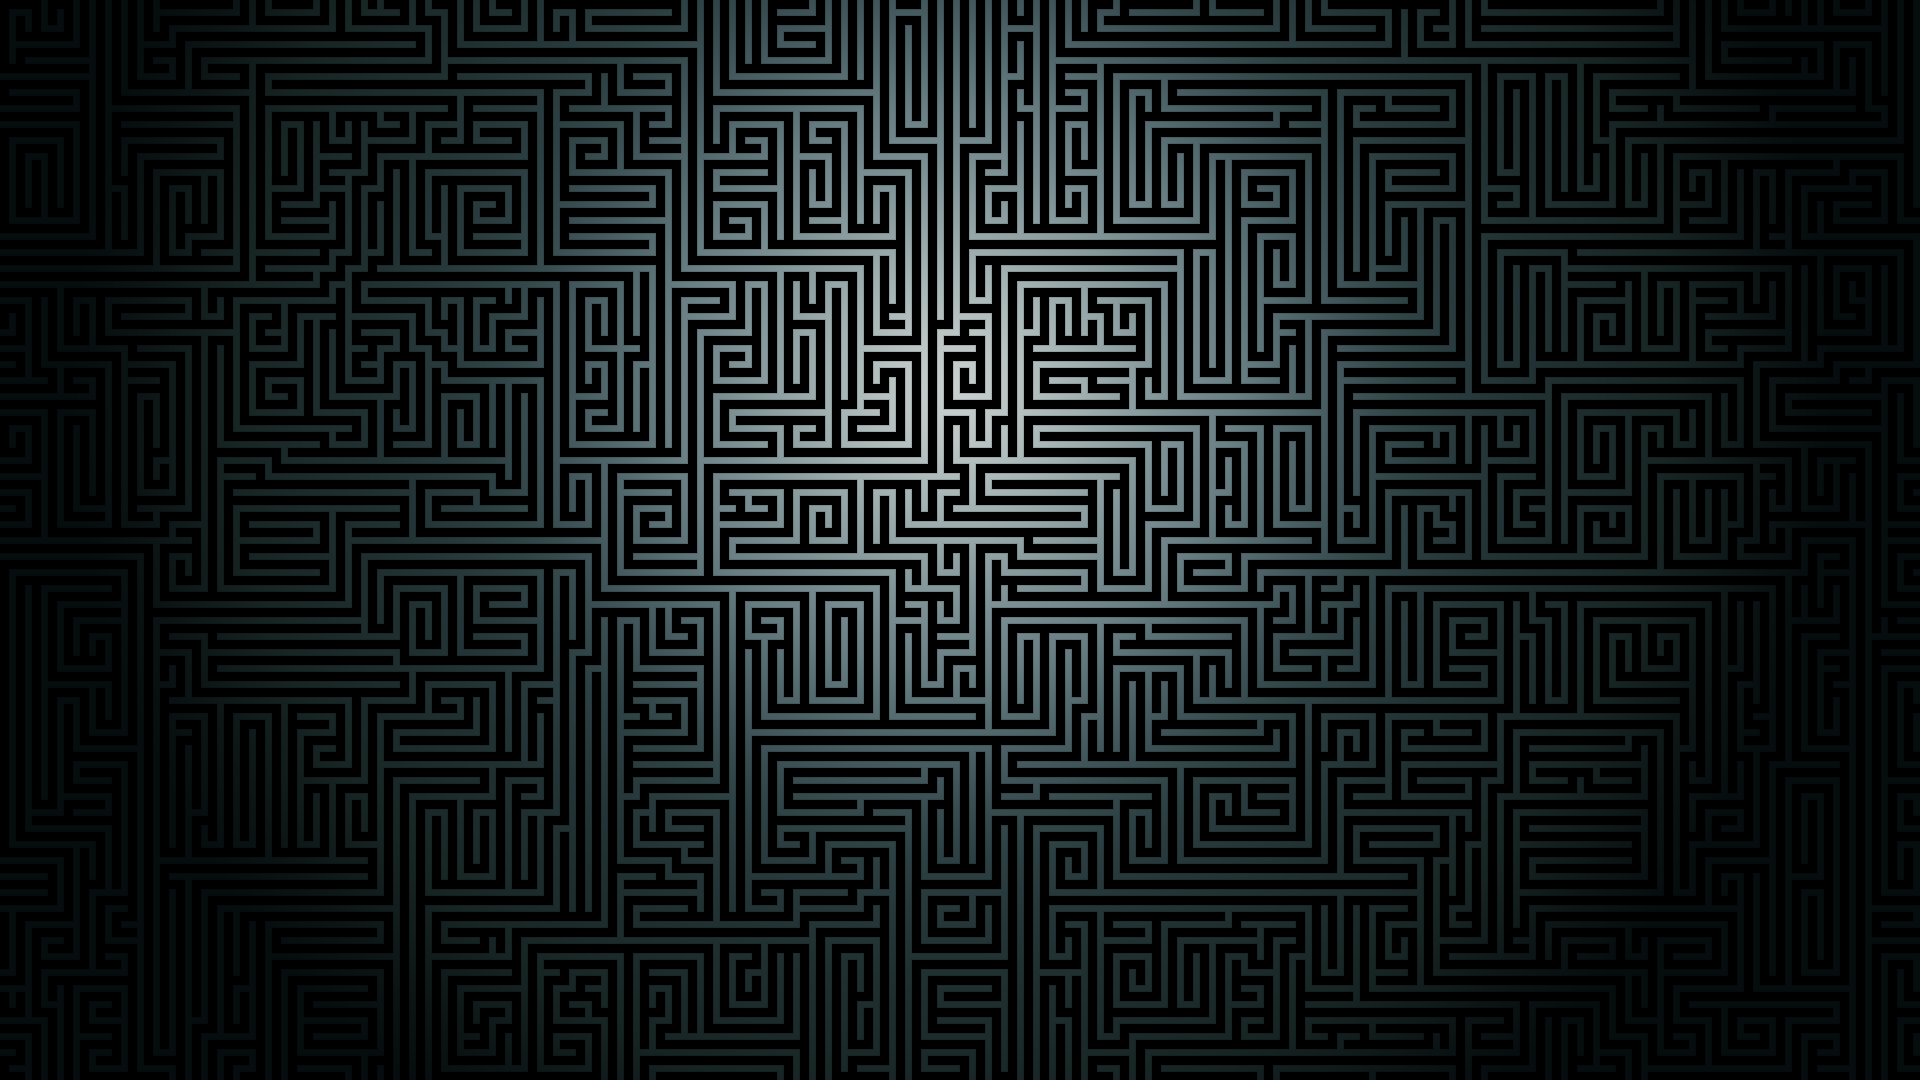 Inception Maze Wallpaper By Crzisme